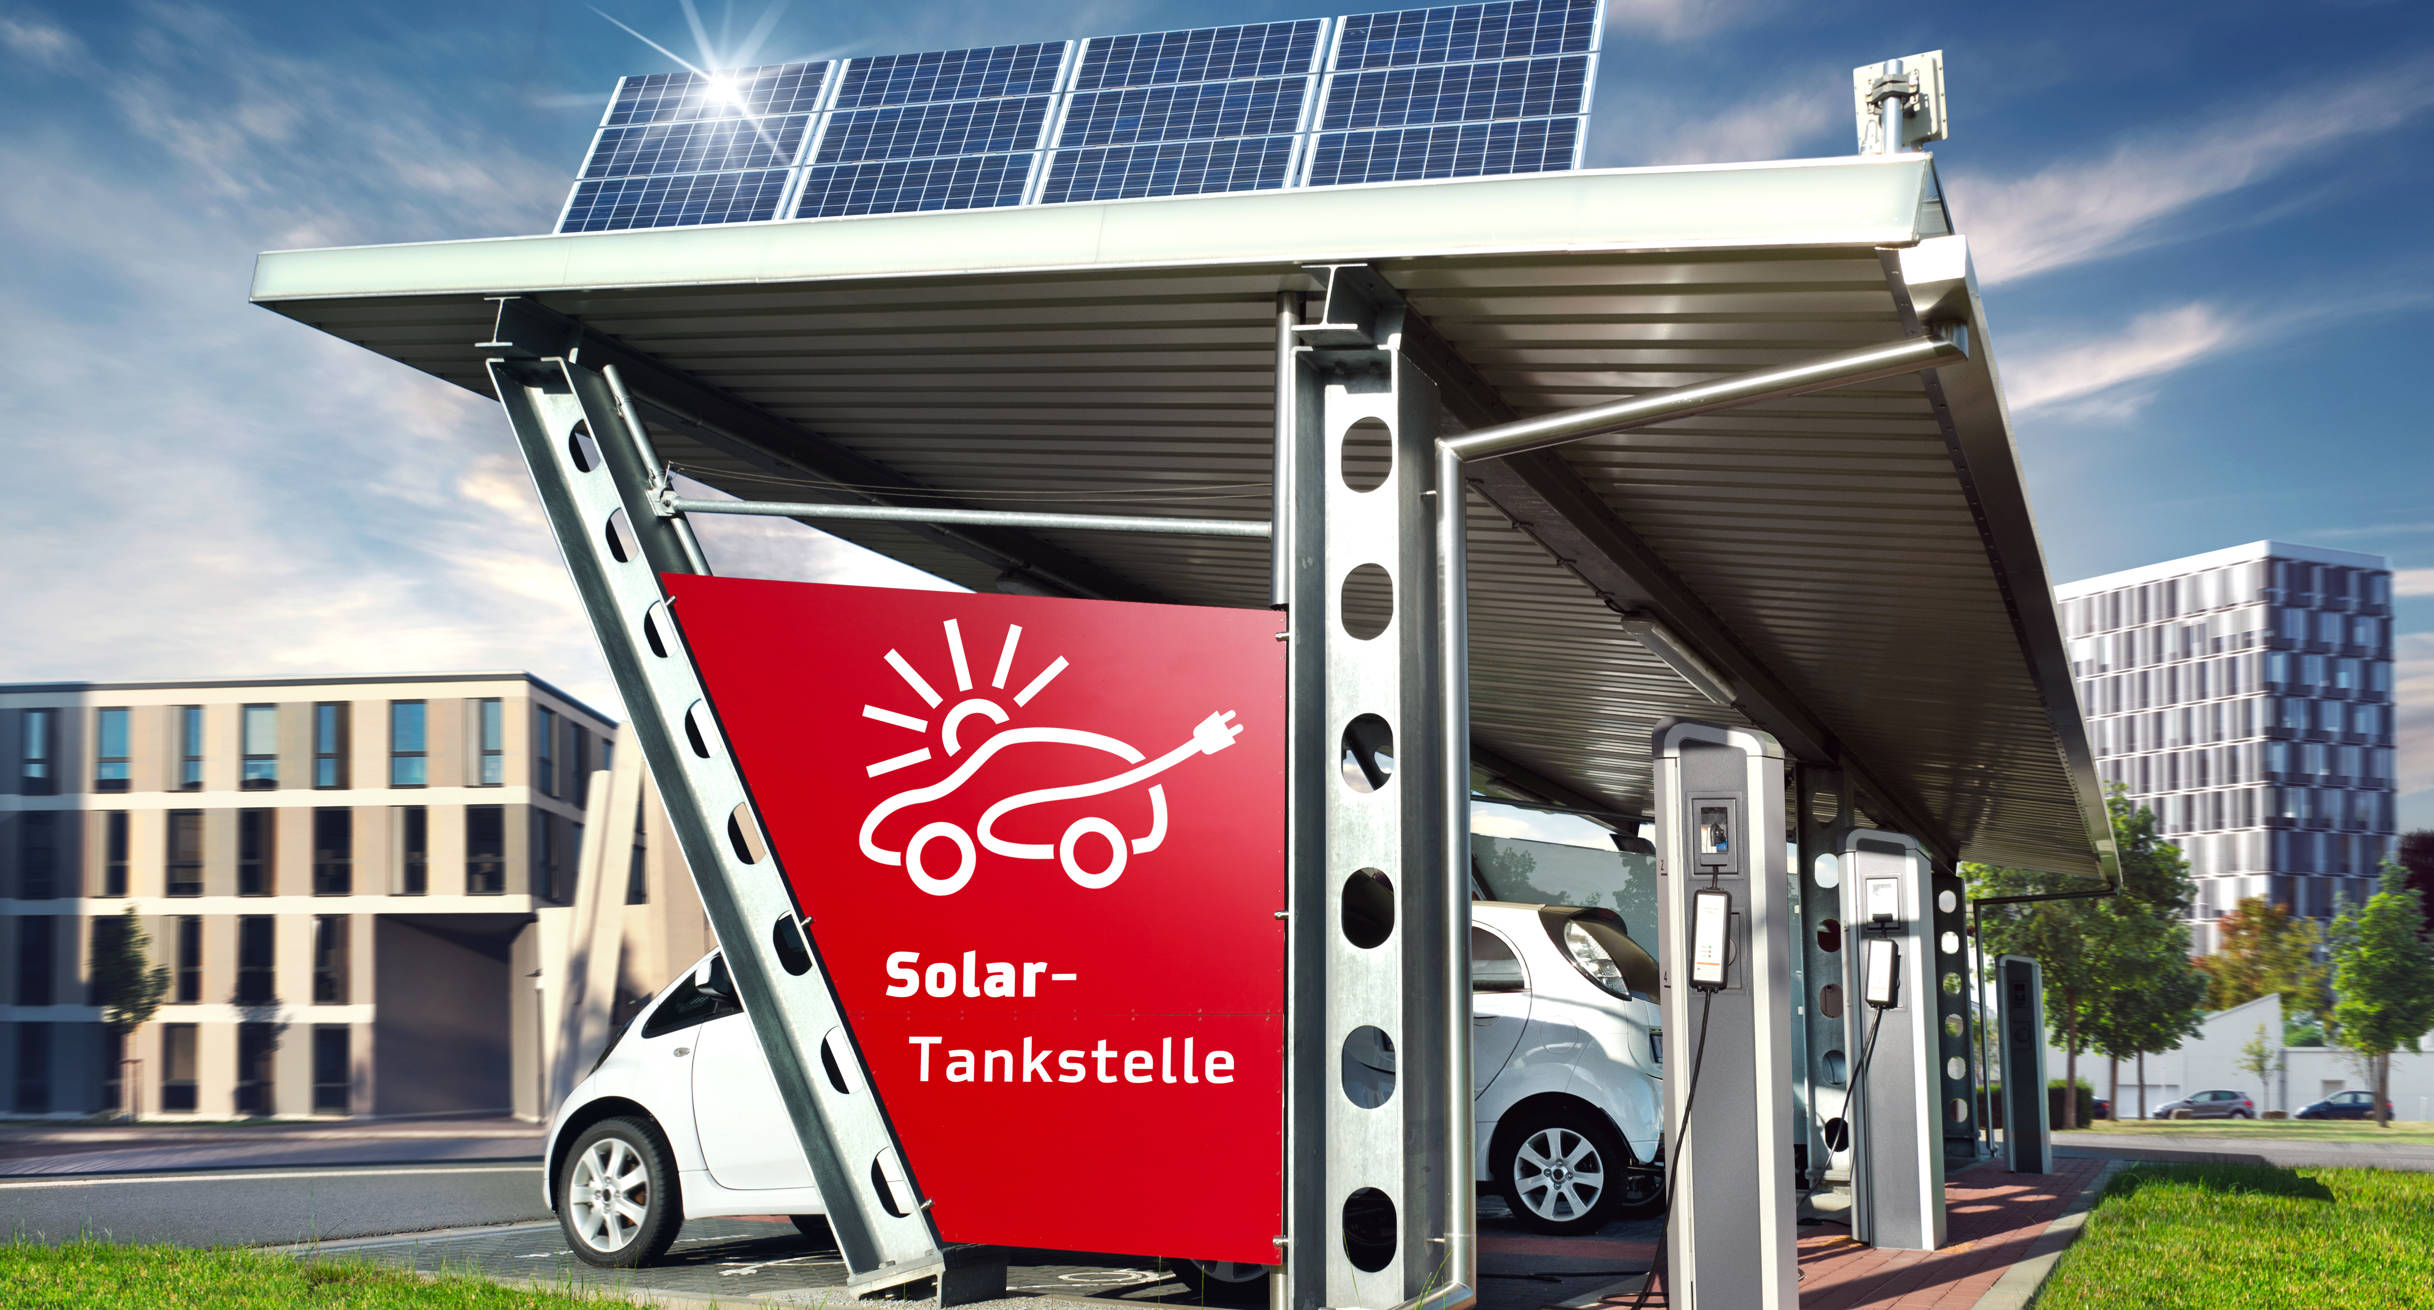 Solartankstelle Carport mit Elektroauto in Stadt